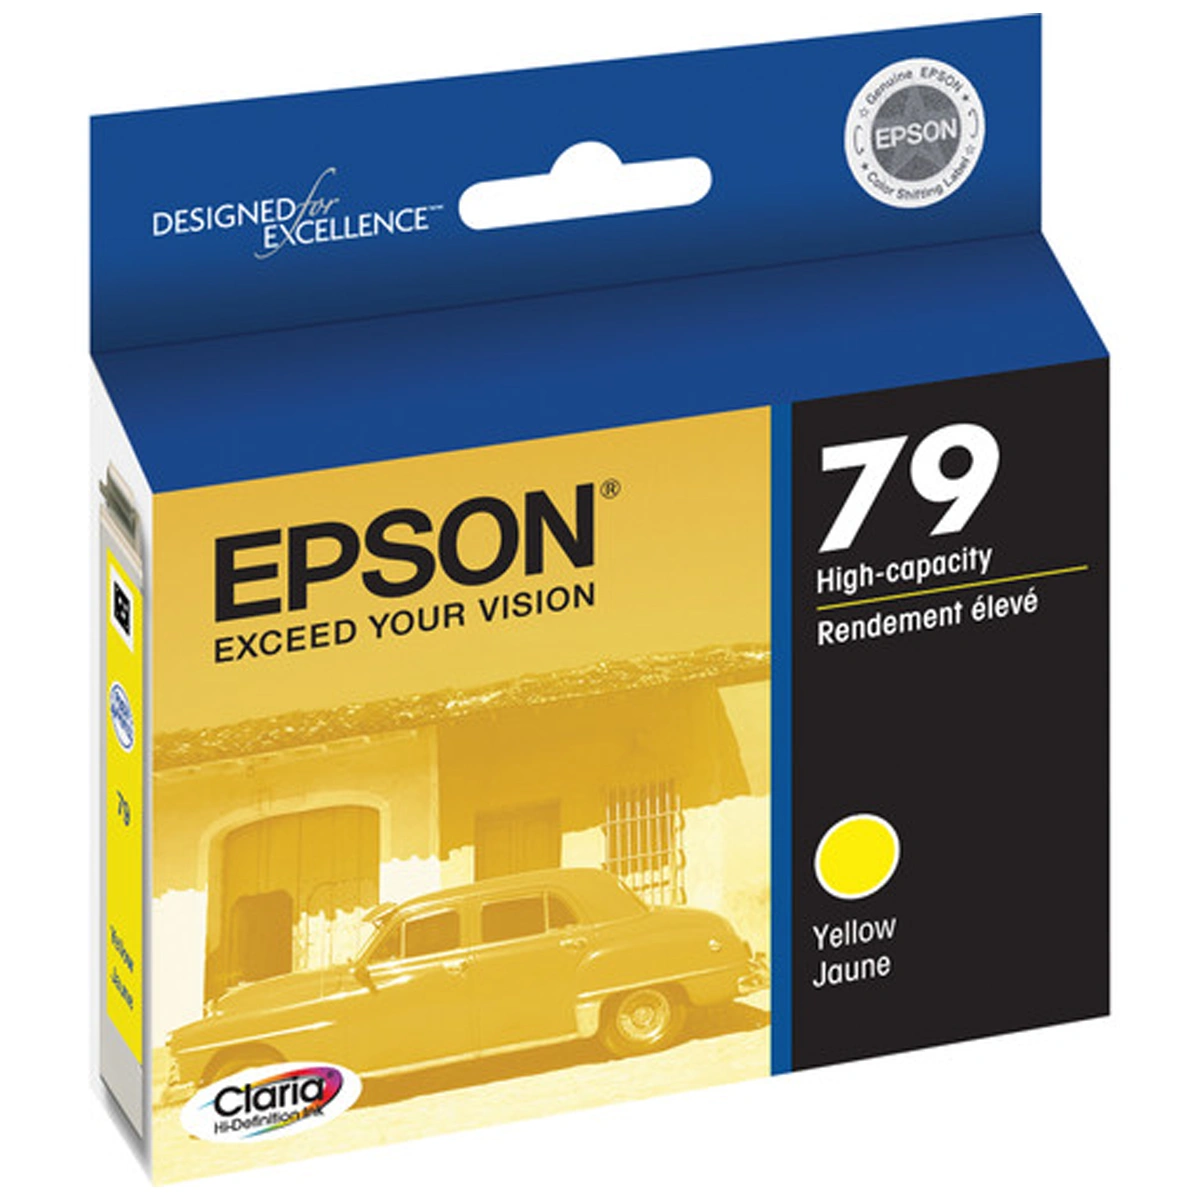 Epson 79 Yellow Ink Cartridge Box At Angle